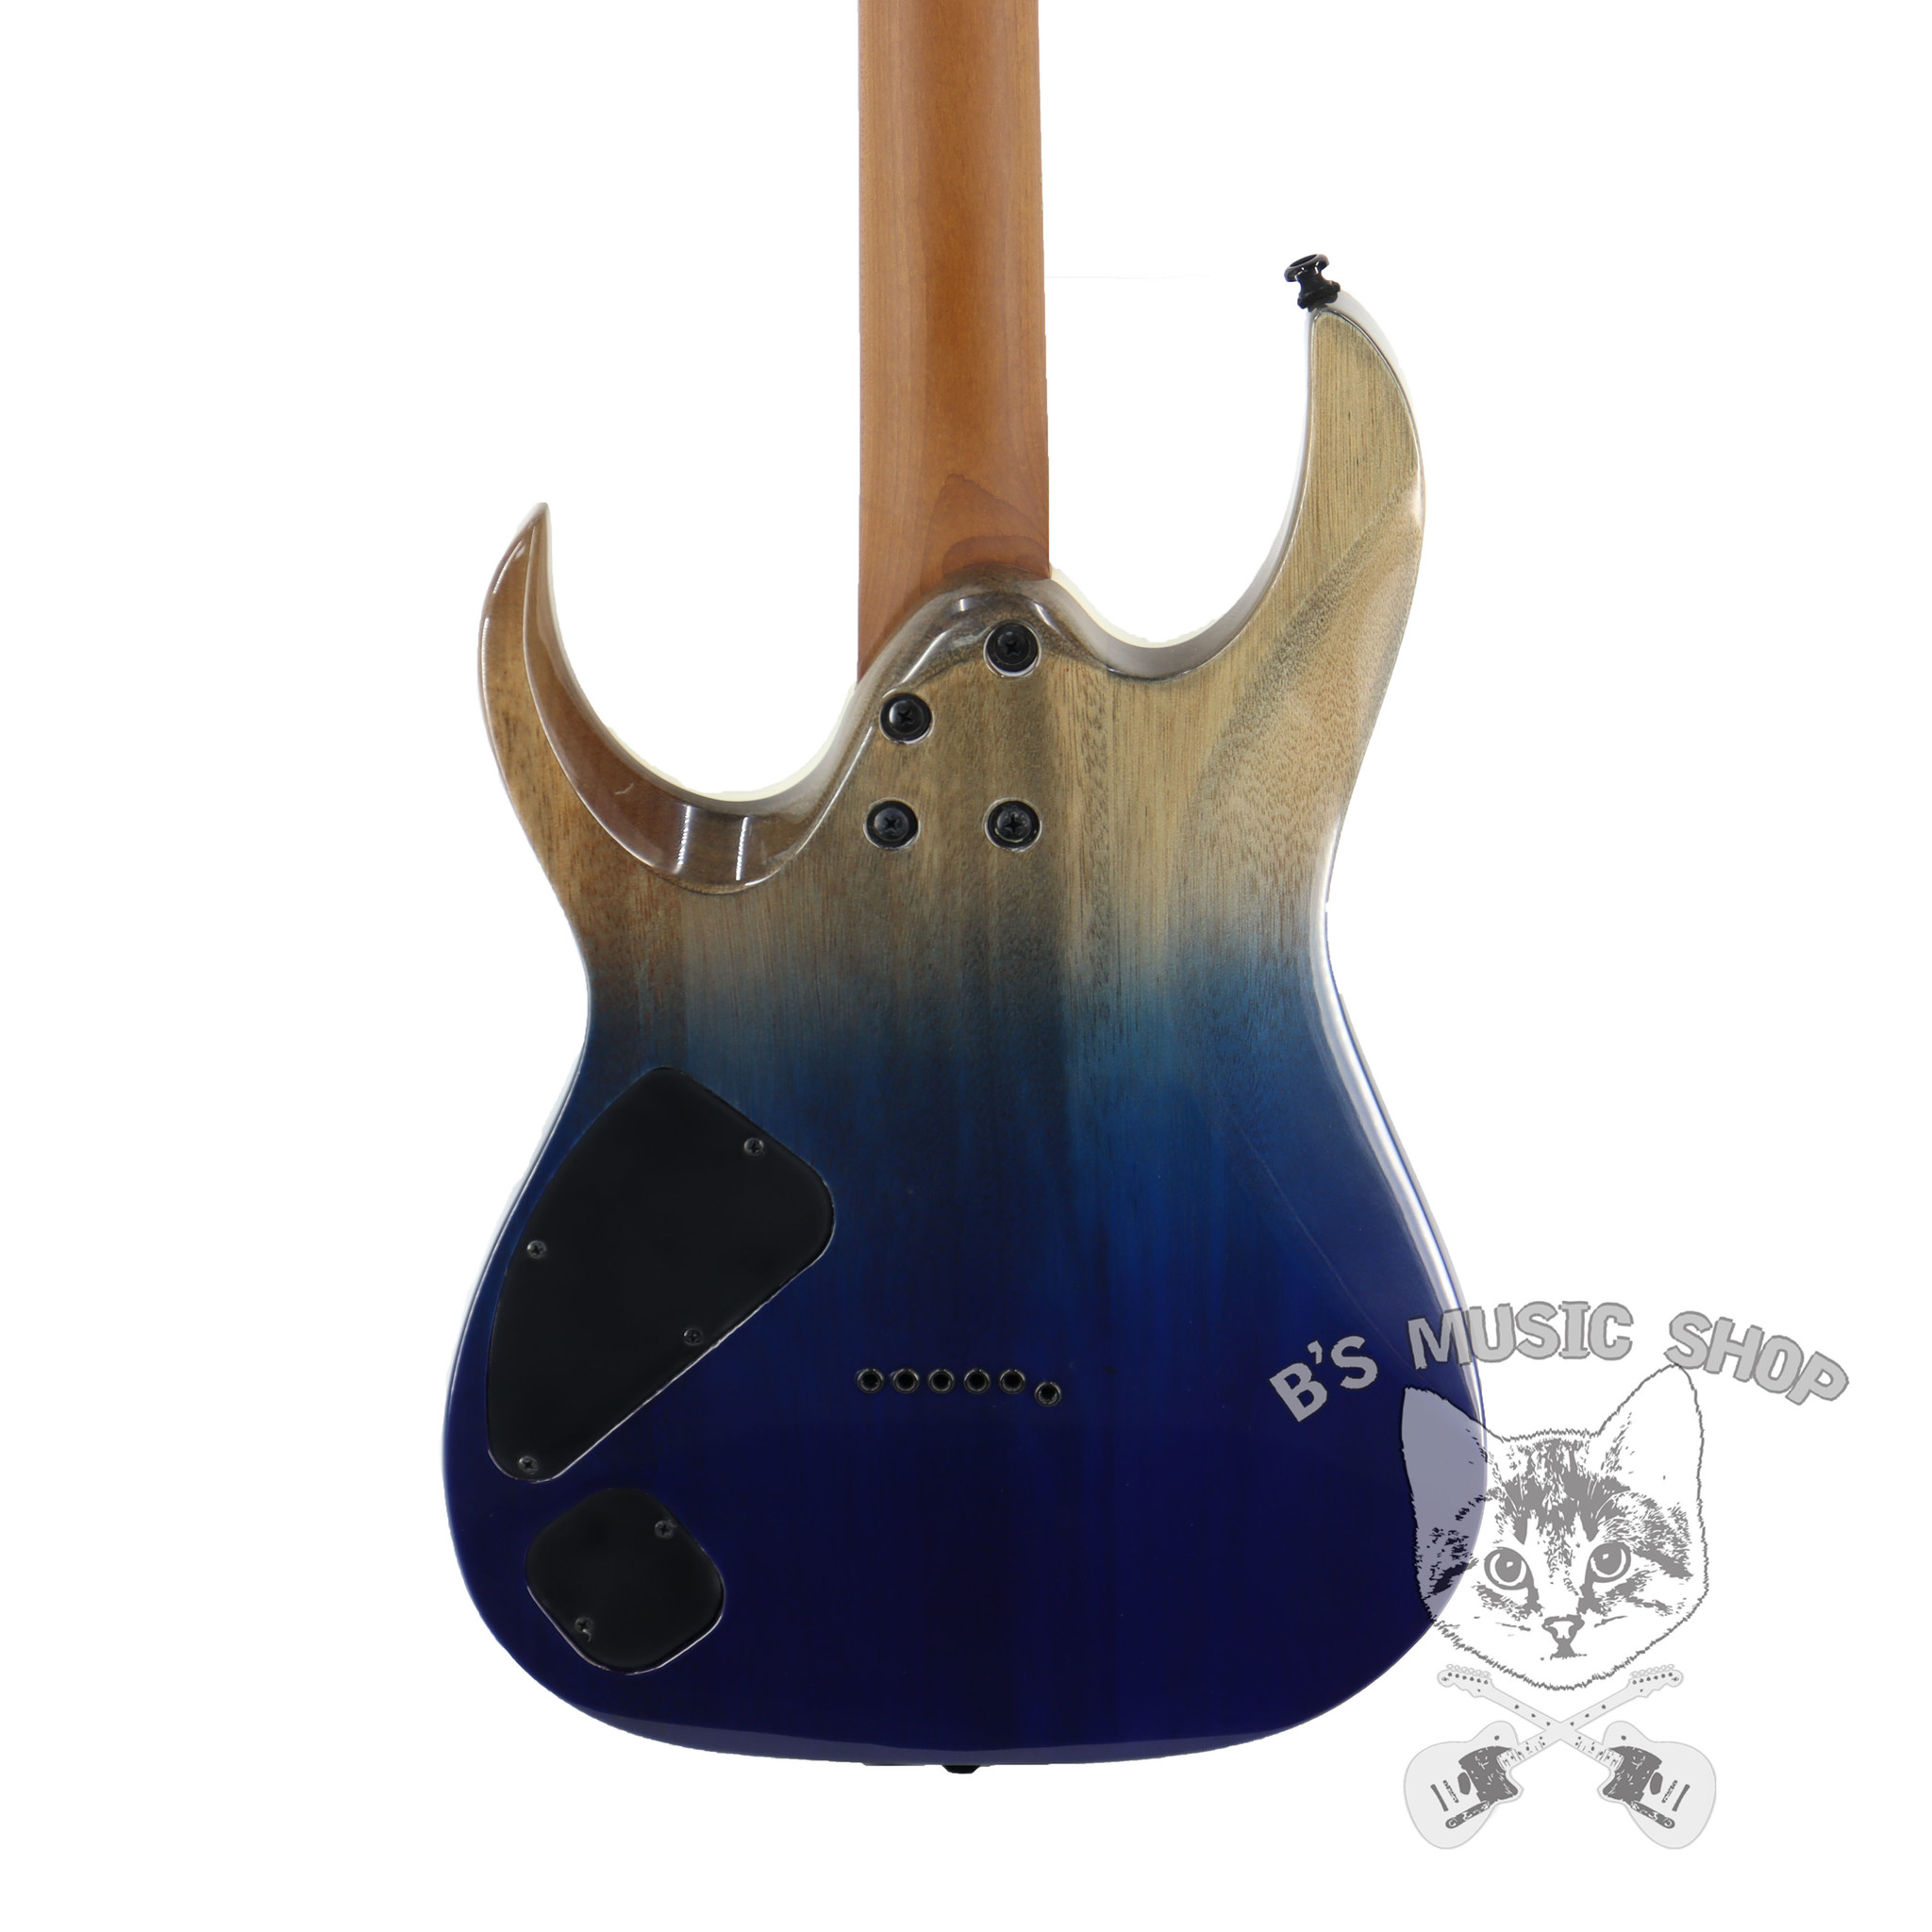 Ibanez High Performance RGA42HPQM Electric Guitar - Blue Iceberg